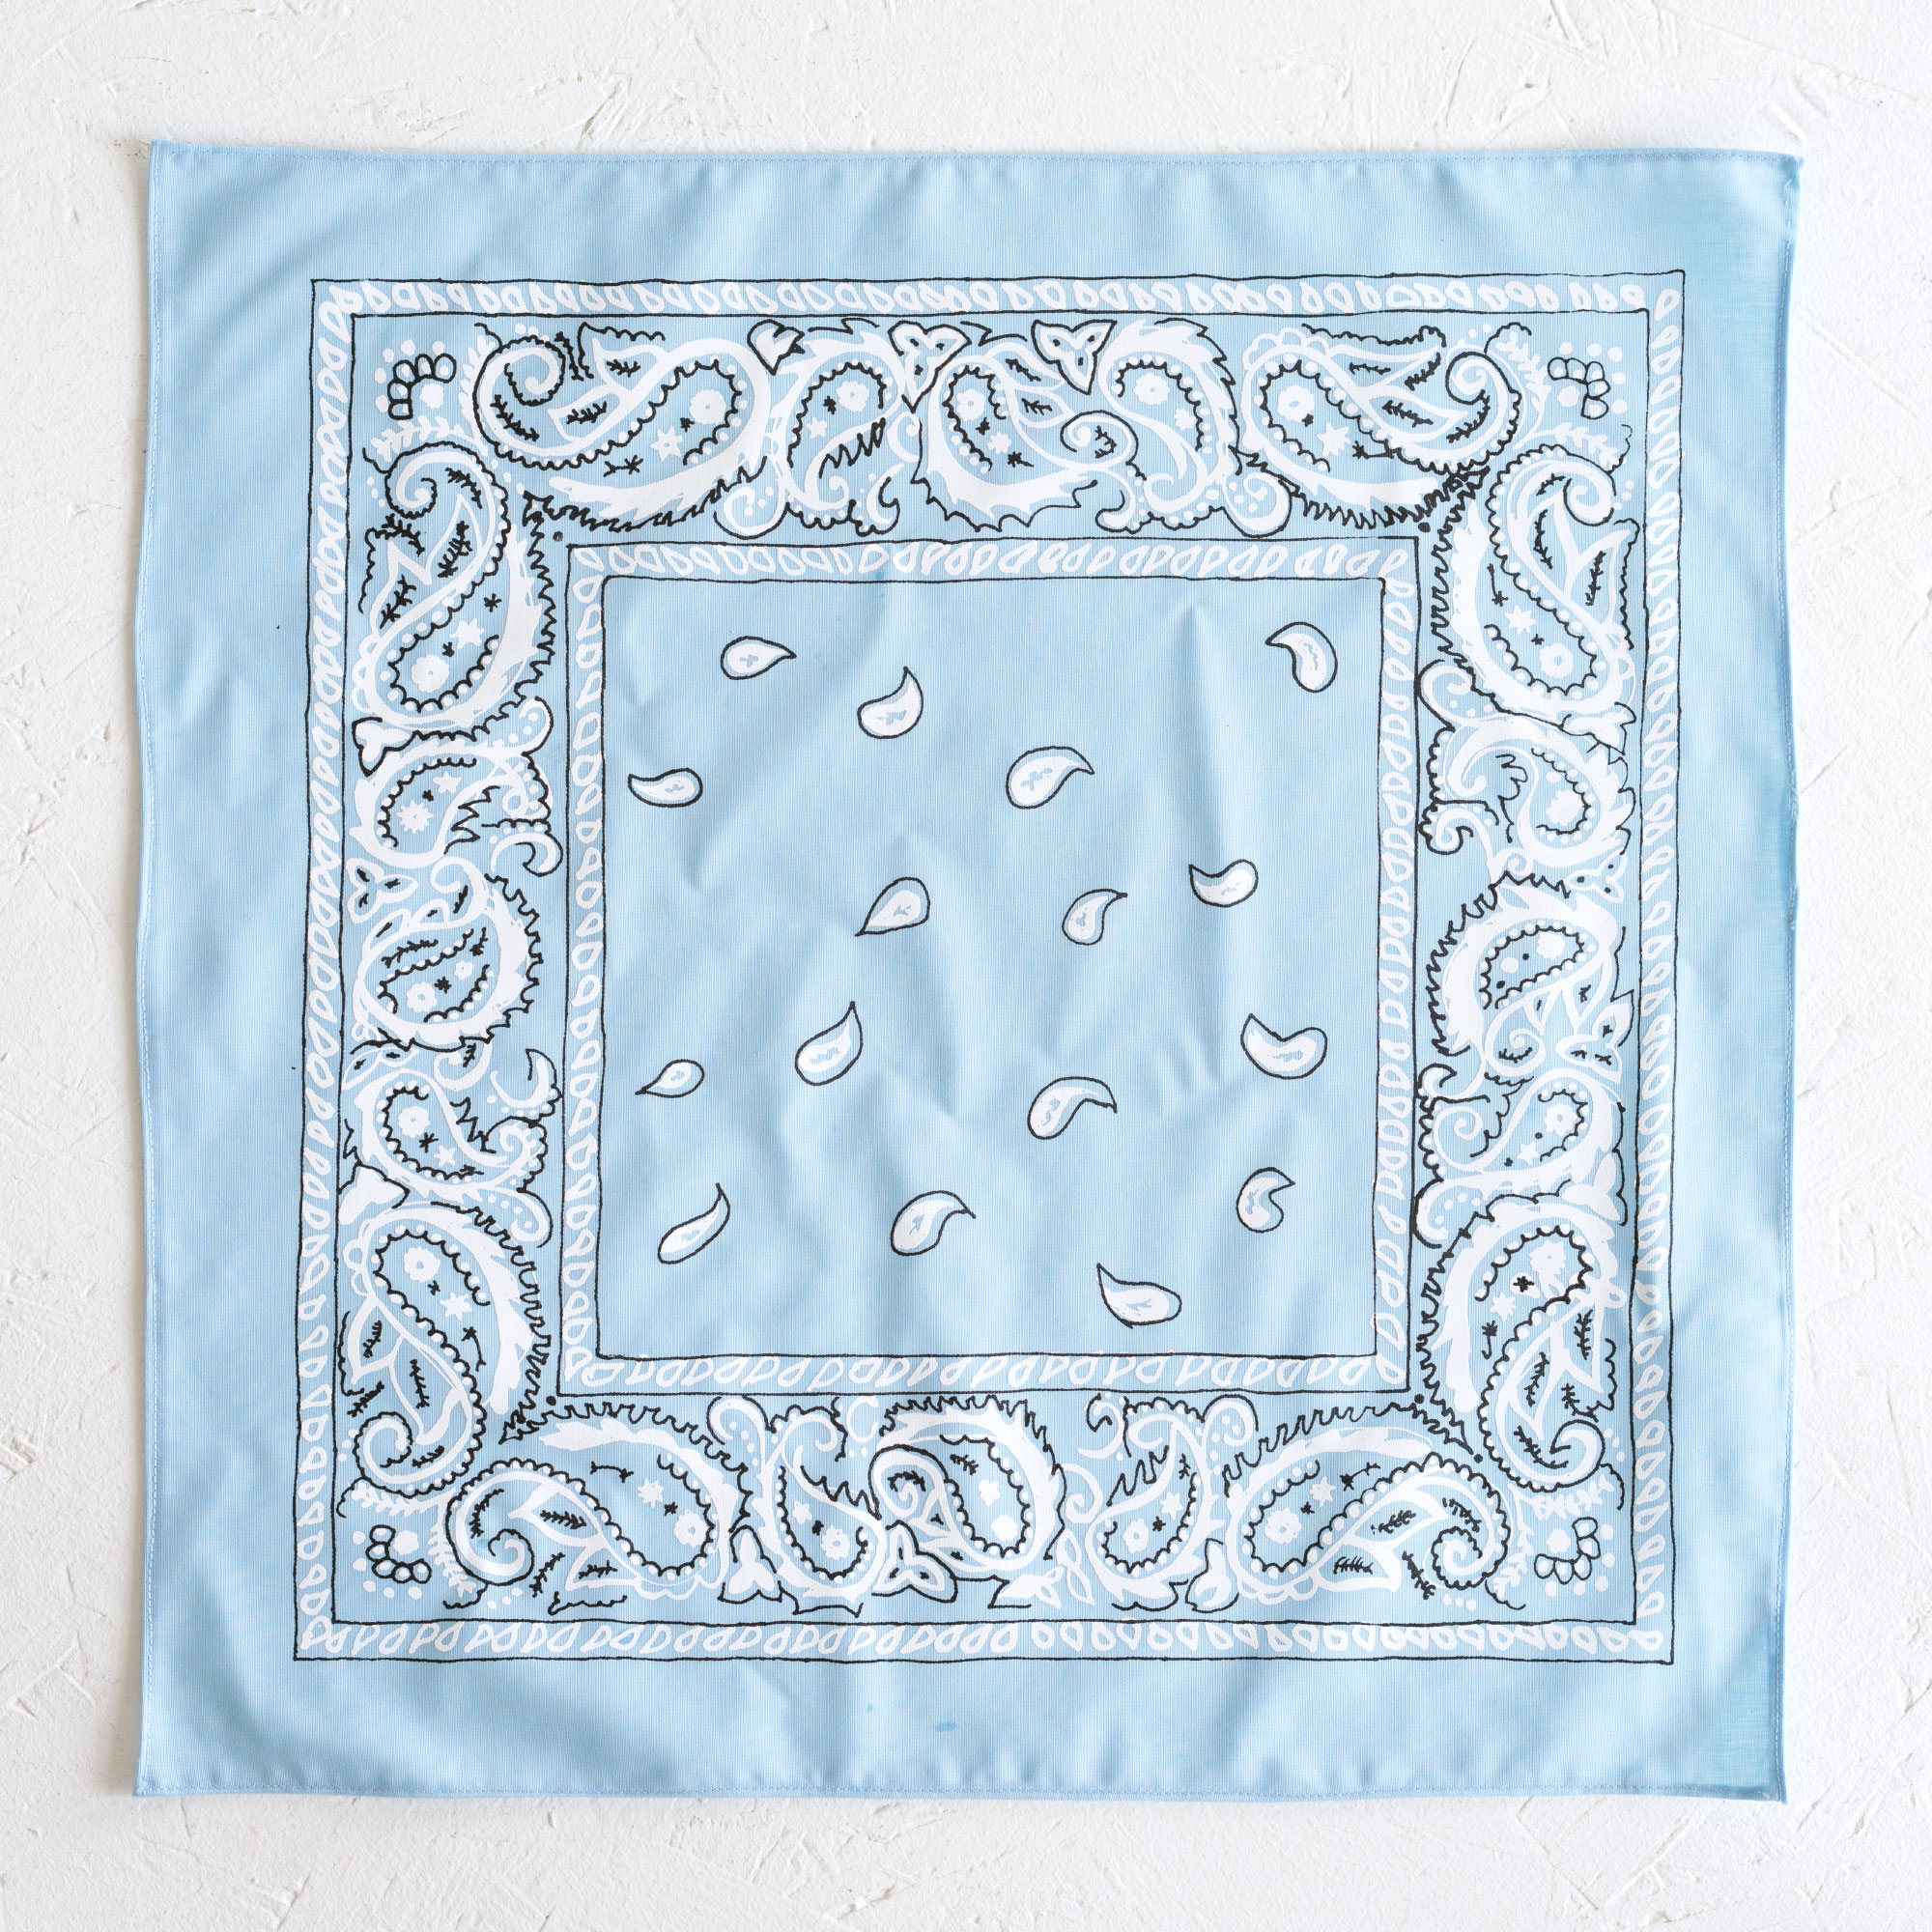 Nancy Davidson, *Hanky Code* (Light Blue), 2016, Two color silkscreen on hand cut & sewn cotton, 17 x 17 inches (43.18 x 43.18 cm)